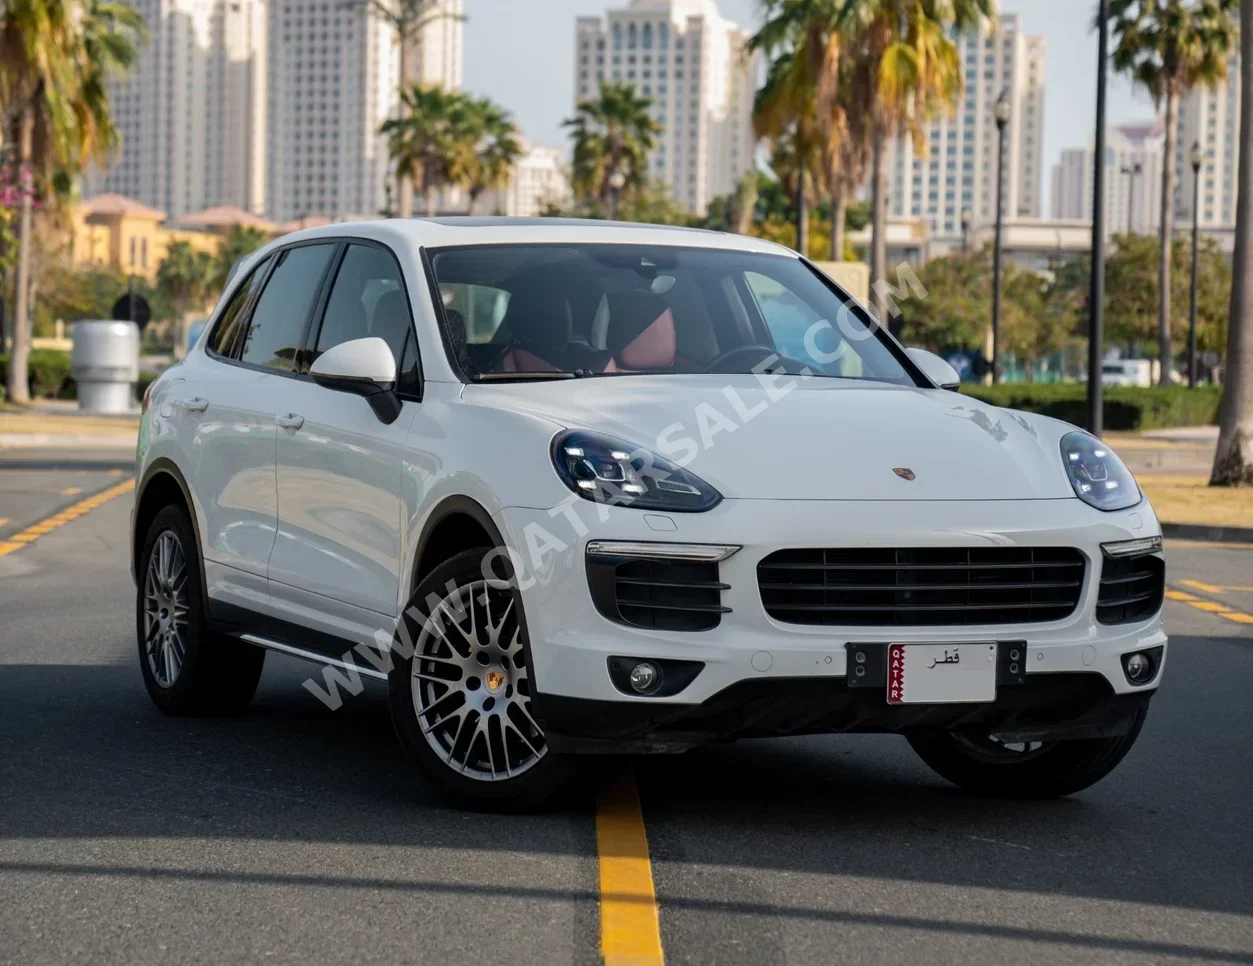 Porsche  Cayenne  2016  Automatic  27,000 Km  6 Cylinder  Four Wheel Drive (4WD)  SUV  White